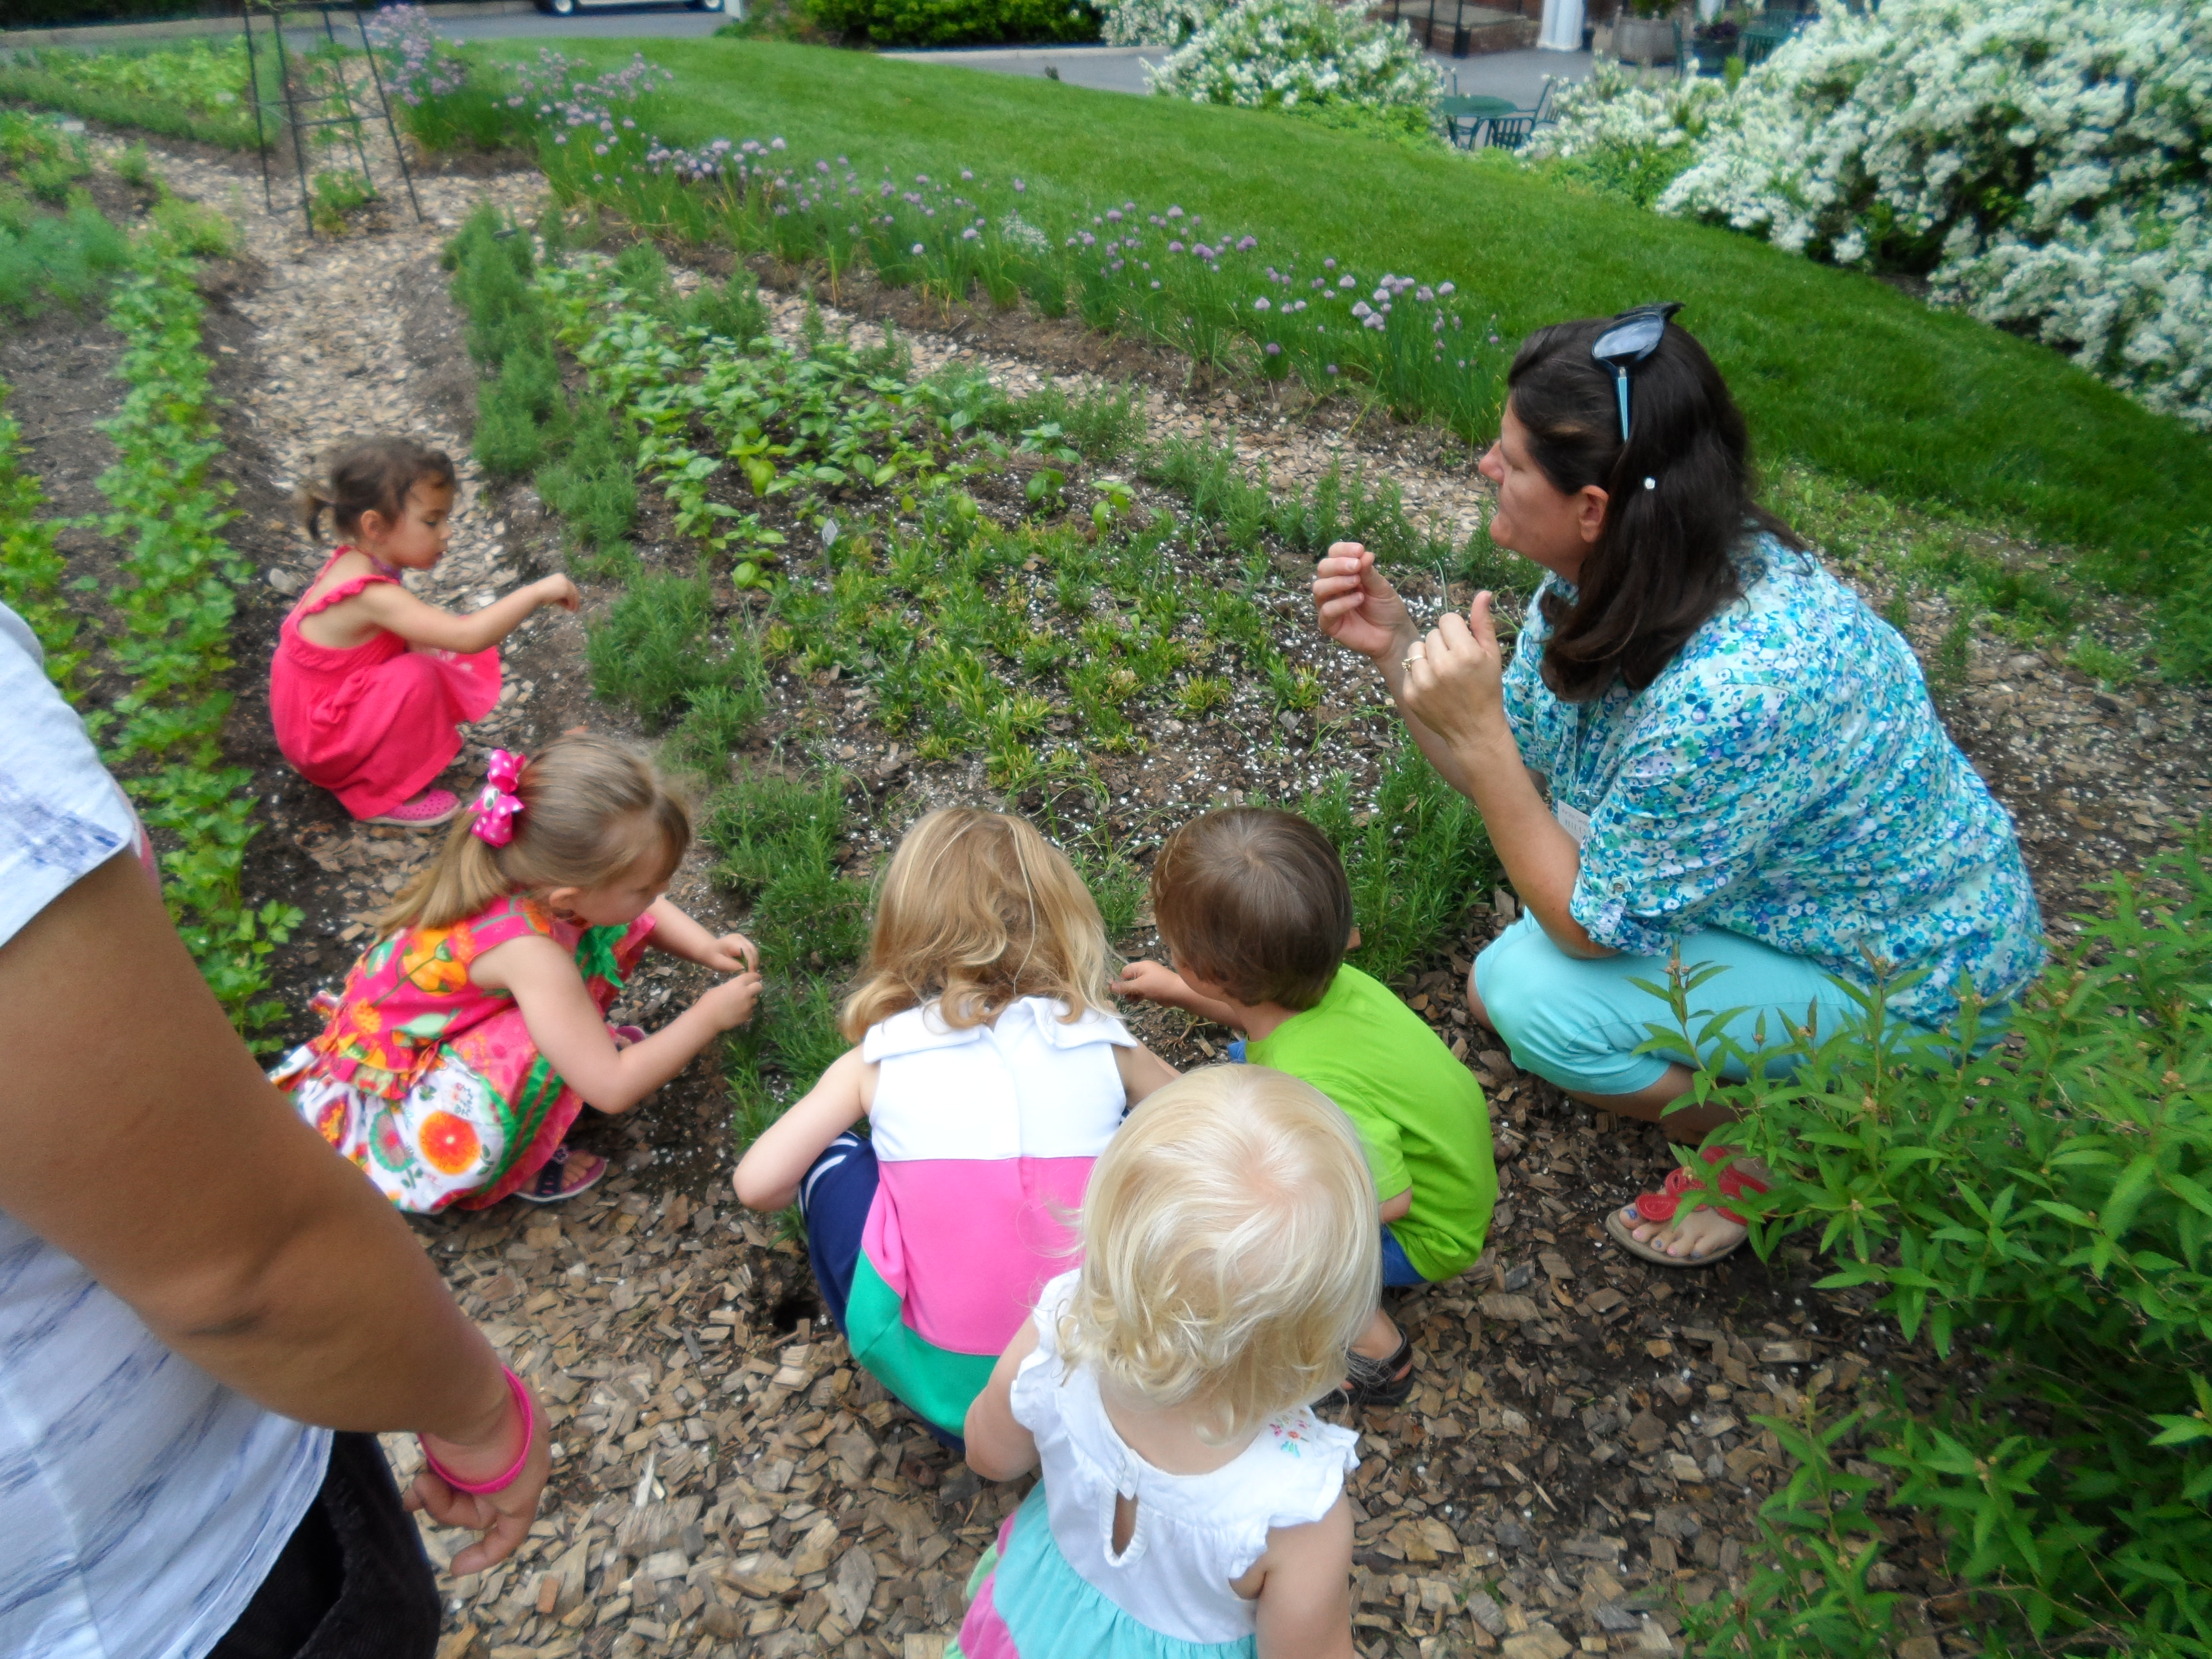 preschoolers gathered around preschool instructor examining plants in cutting garden